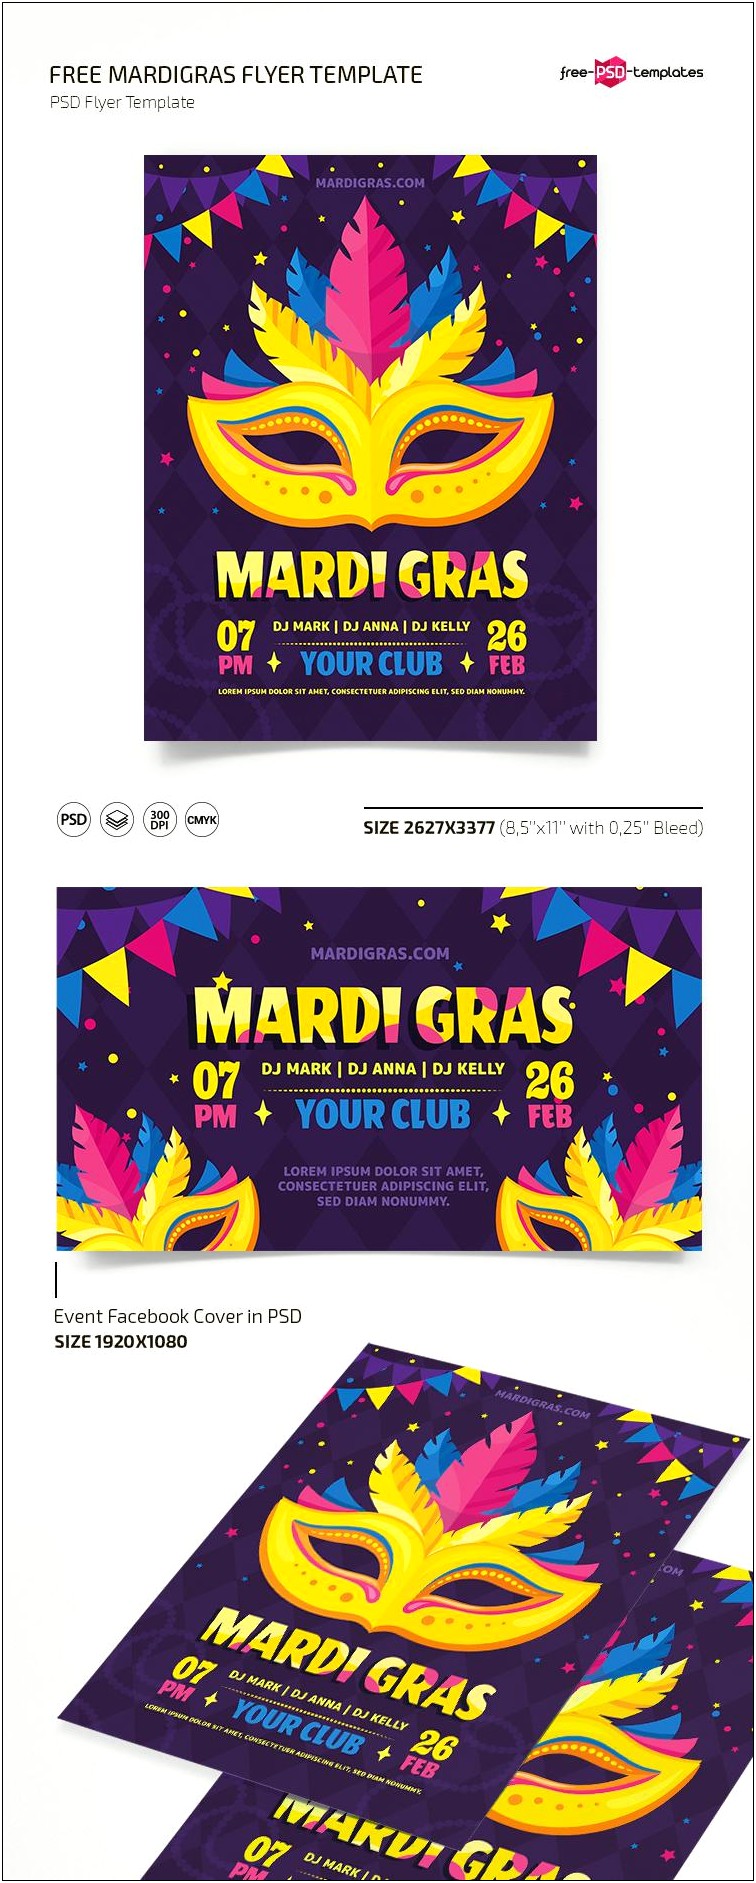 Free Mardi Gras Flyer Psd Template